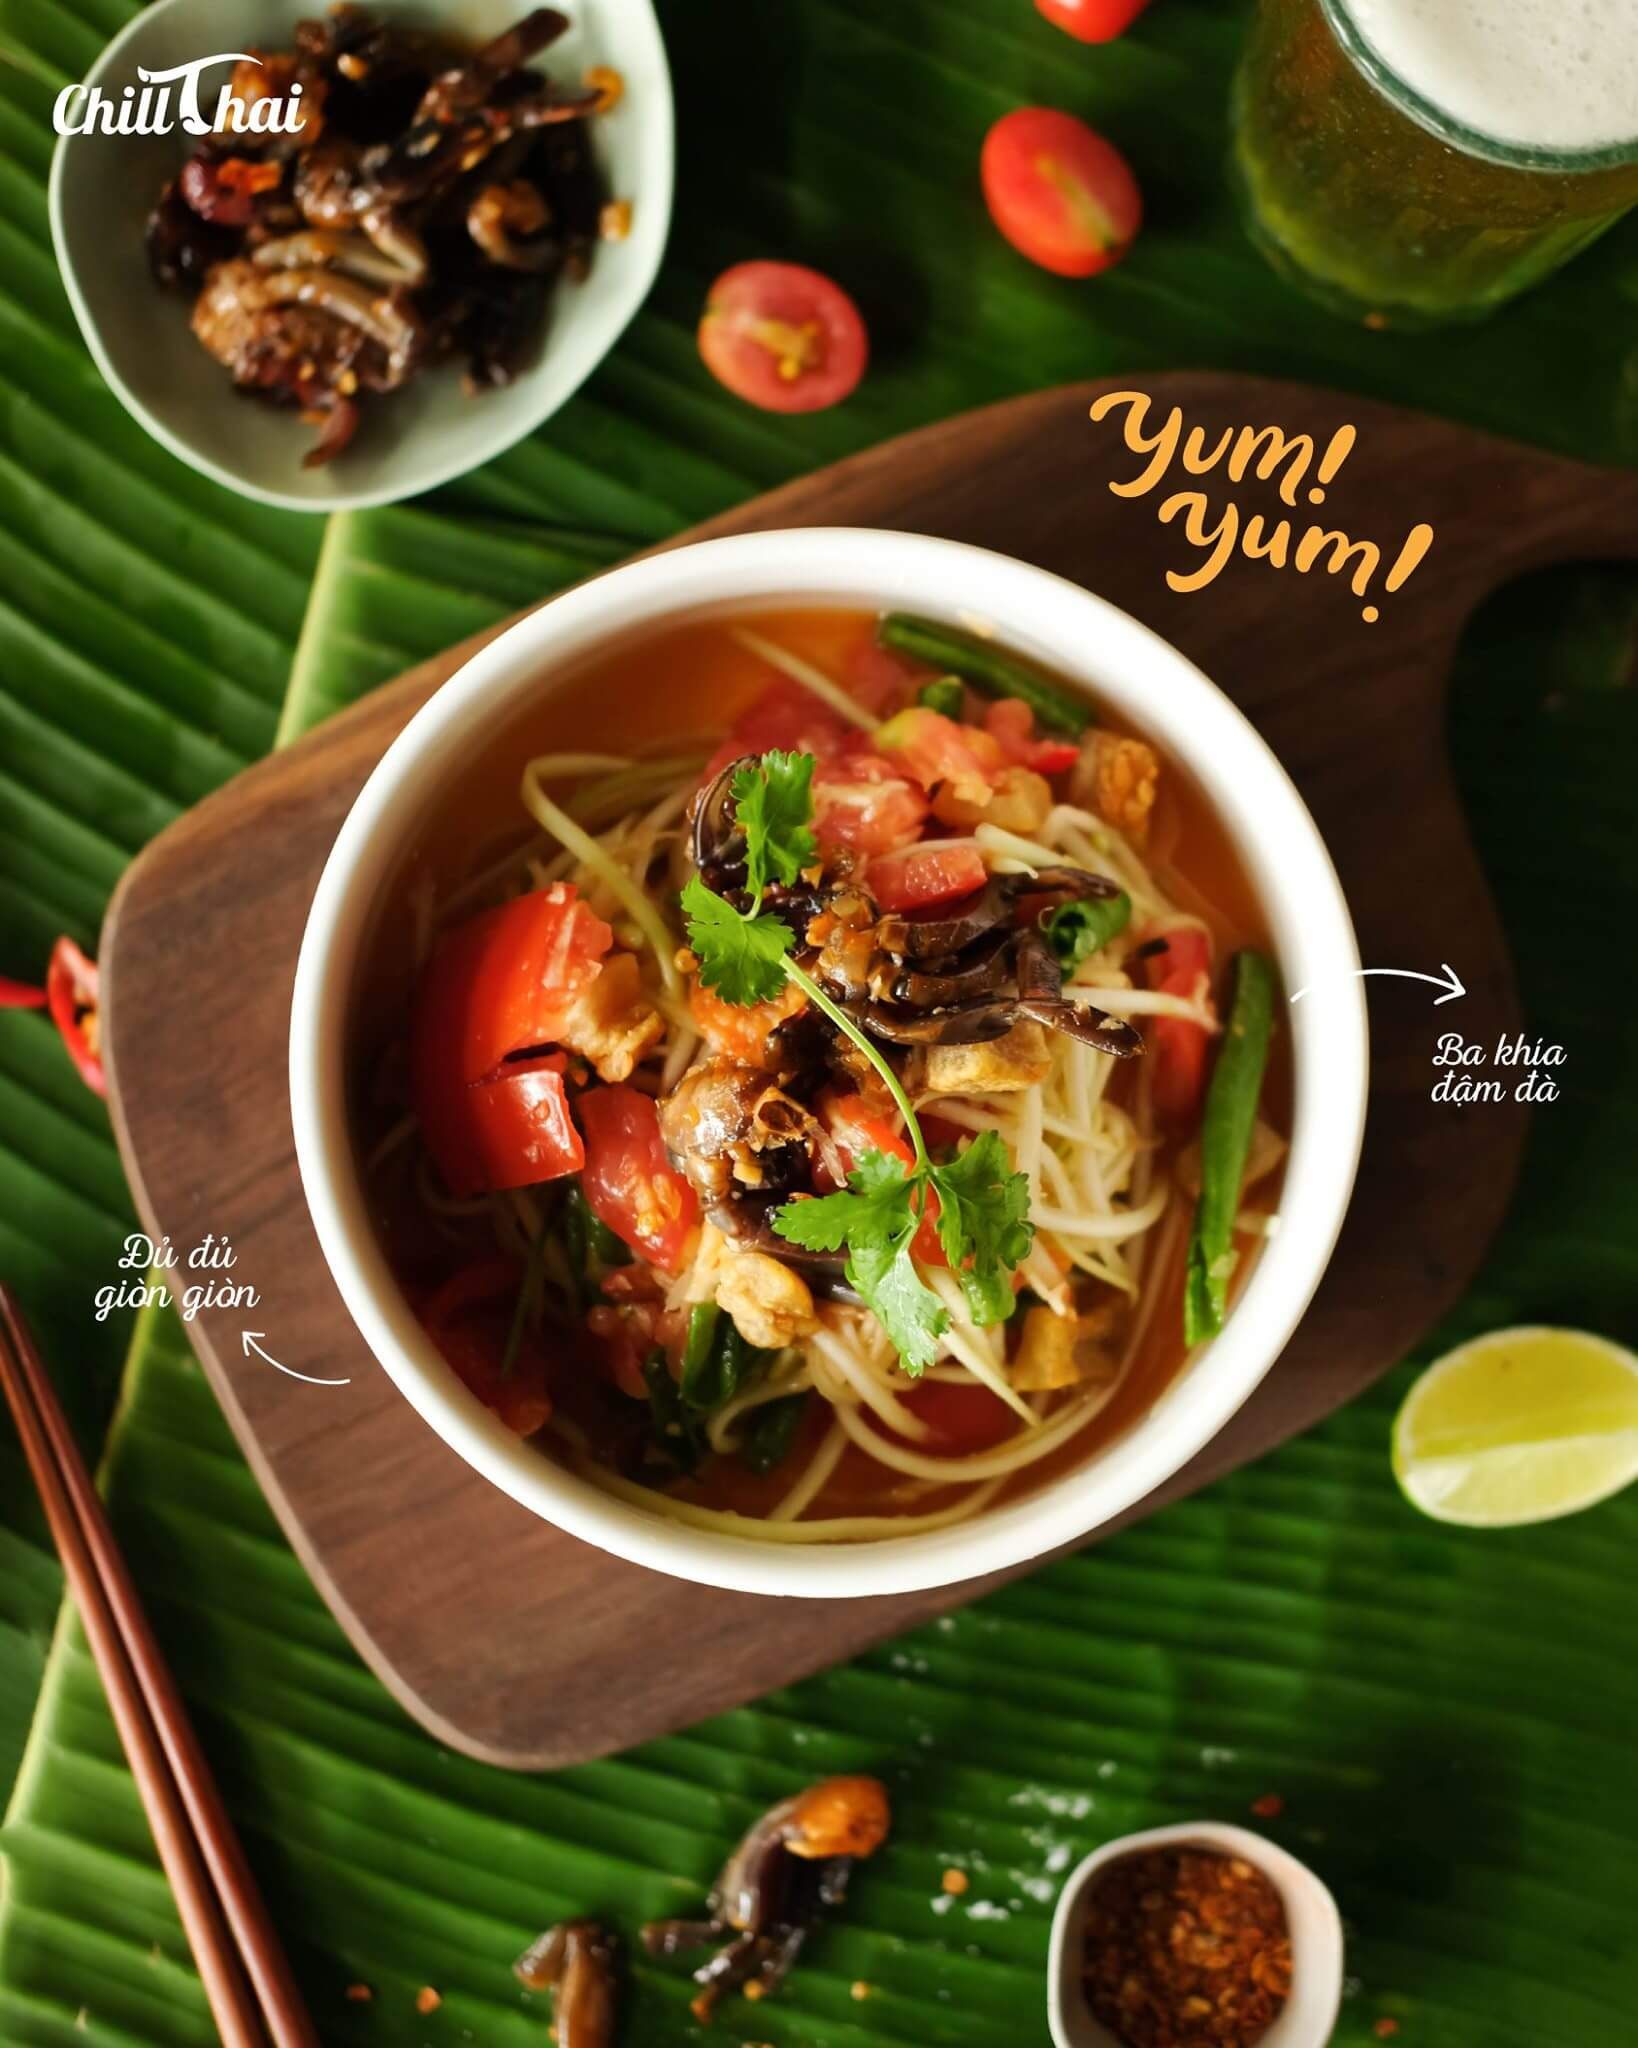 Chill Thai - Thai Food - Nguyễn Thị Thập